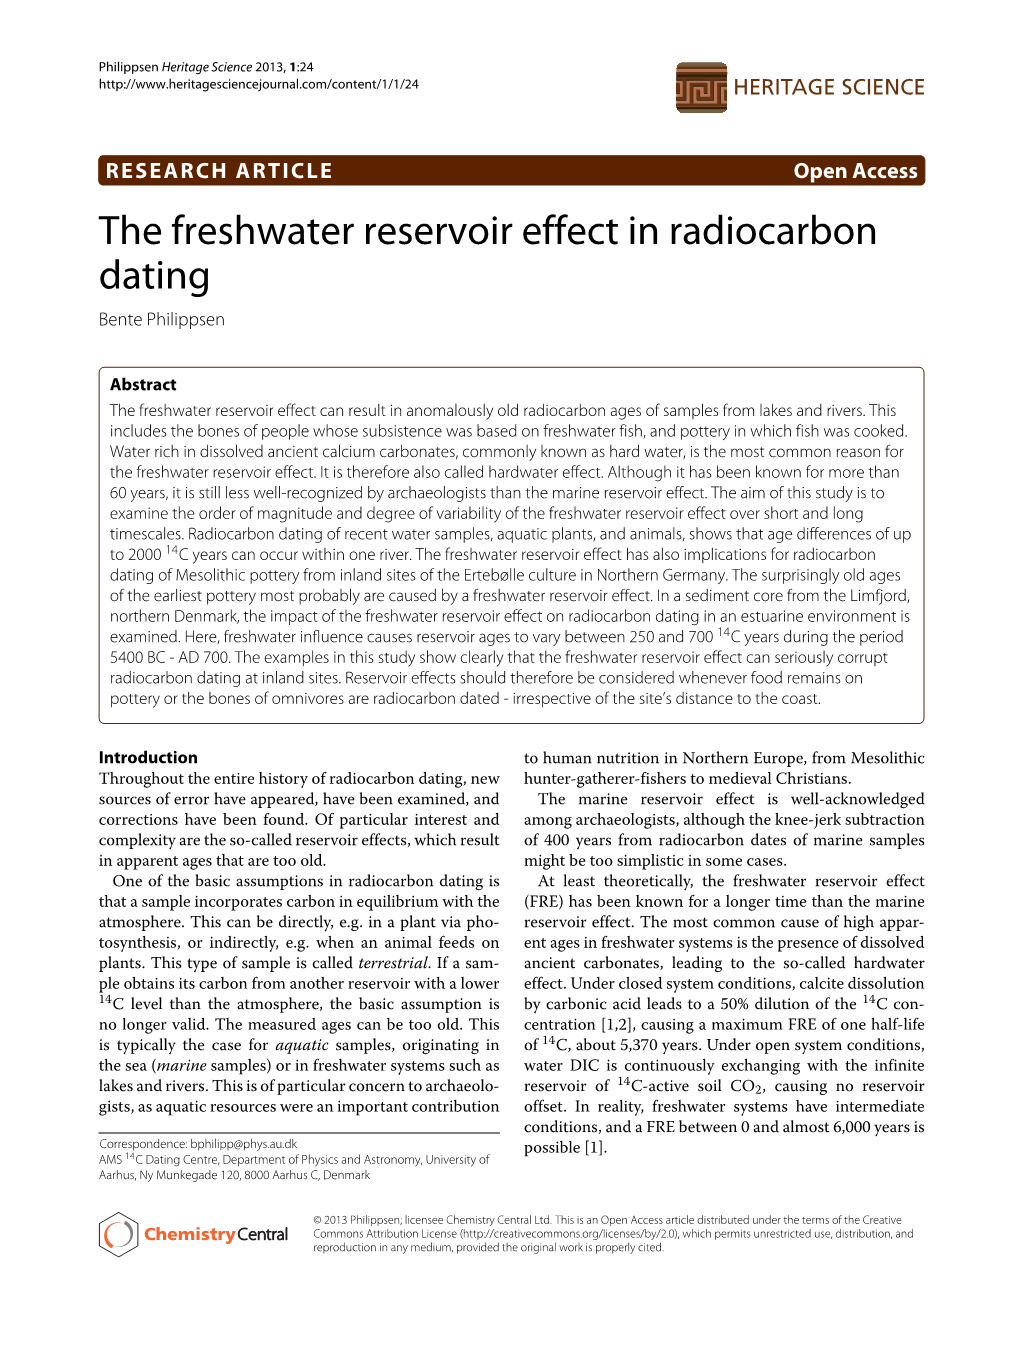 The Freshwater Reservoir Effect in Radiocarbon Dating Bente Philippsen